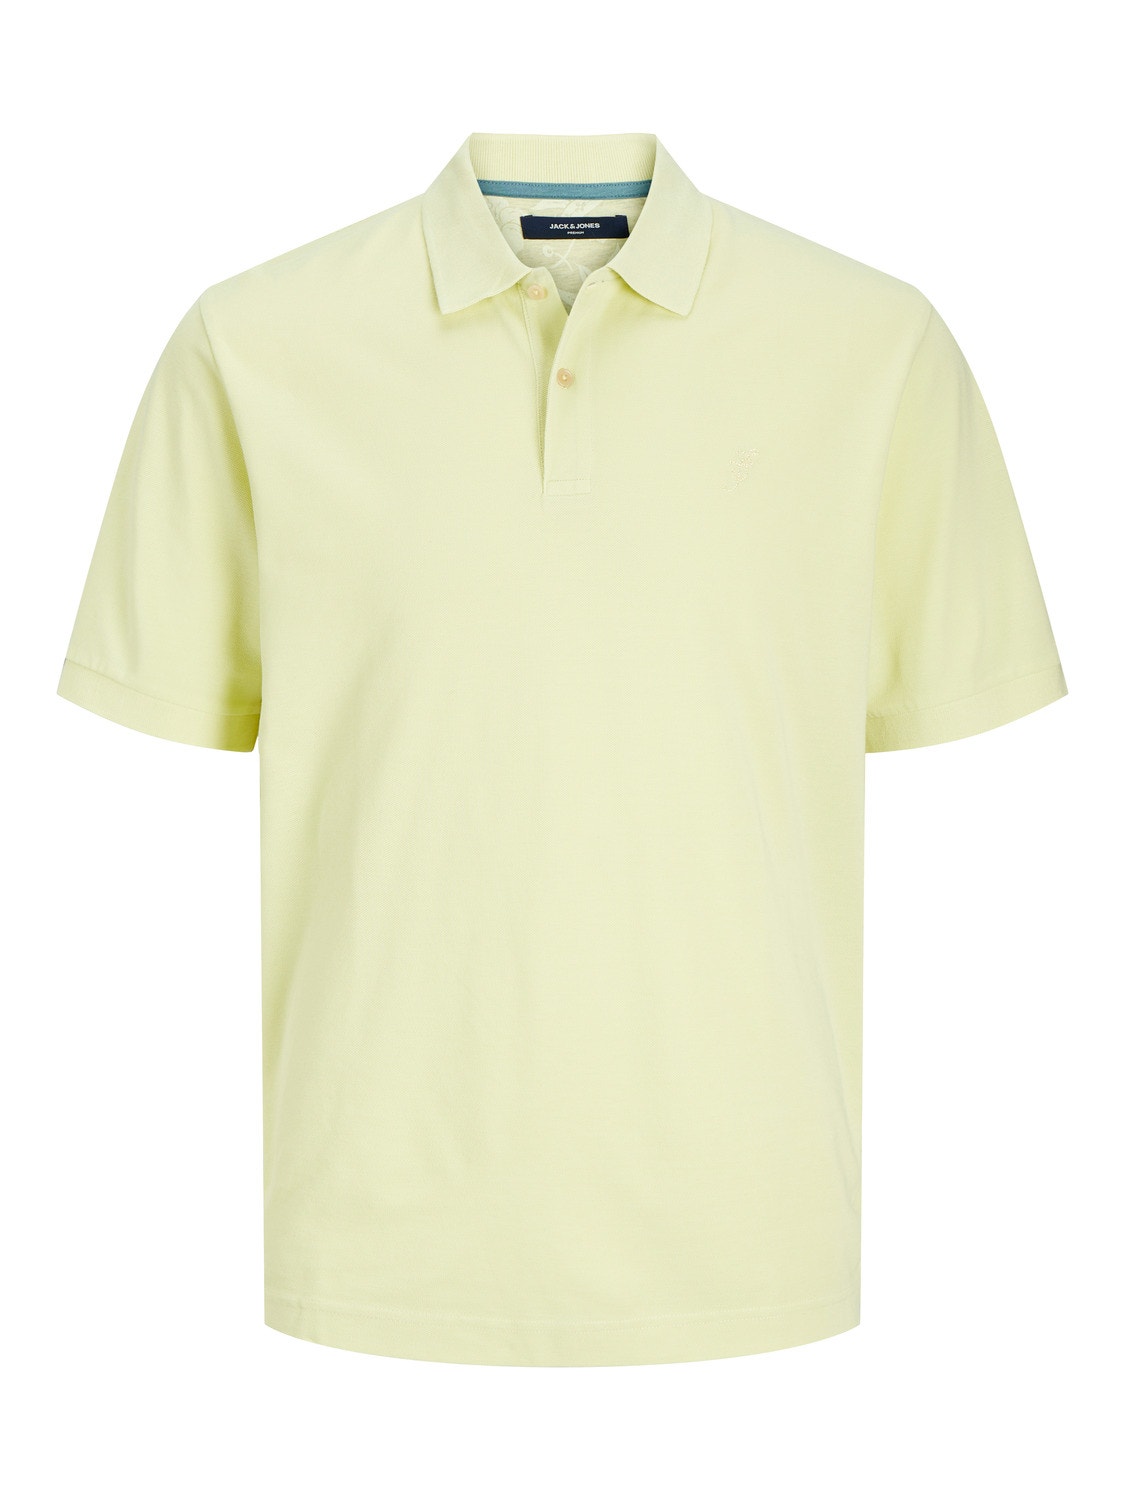 Jack & Jones Plain Polo T-shirt -Pale Lime Yellow - 12257315